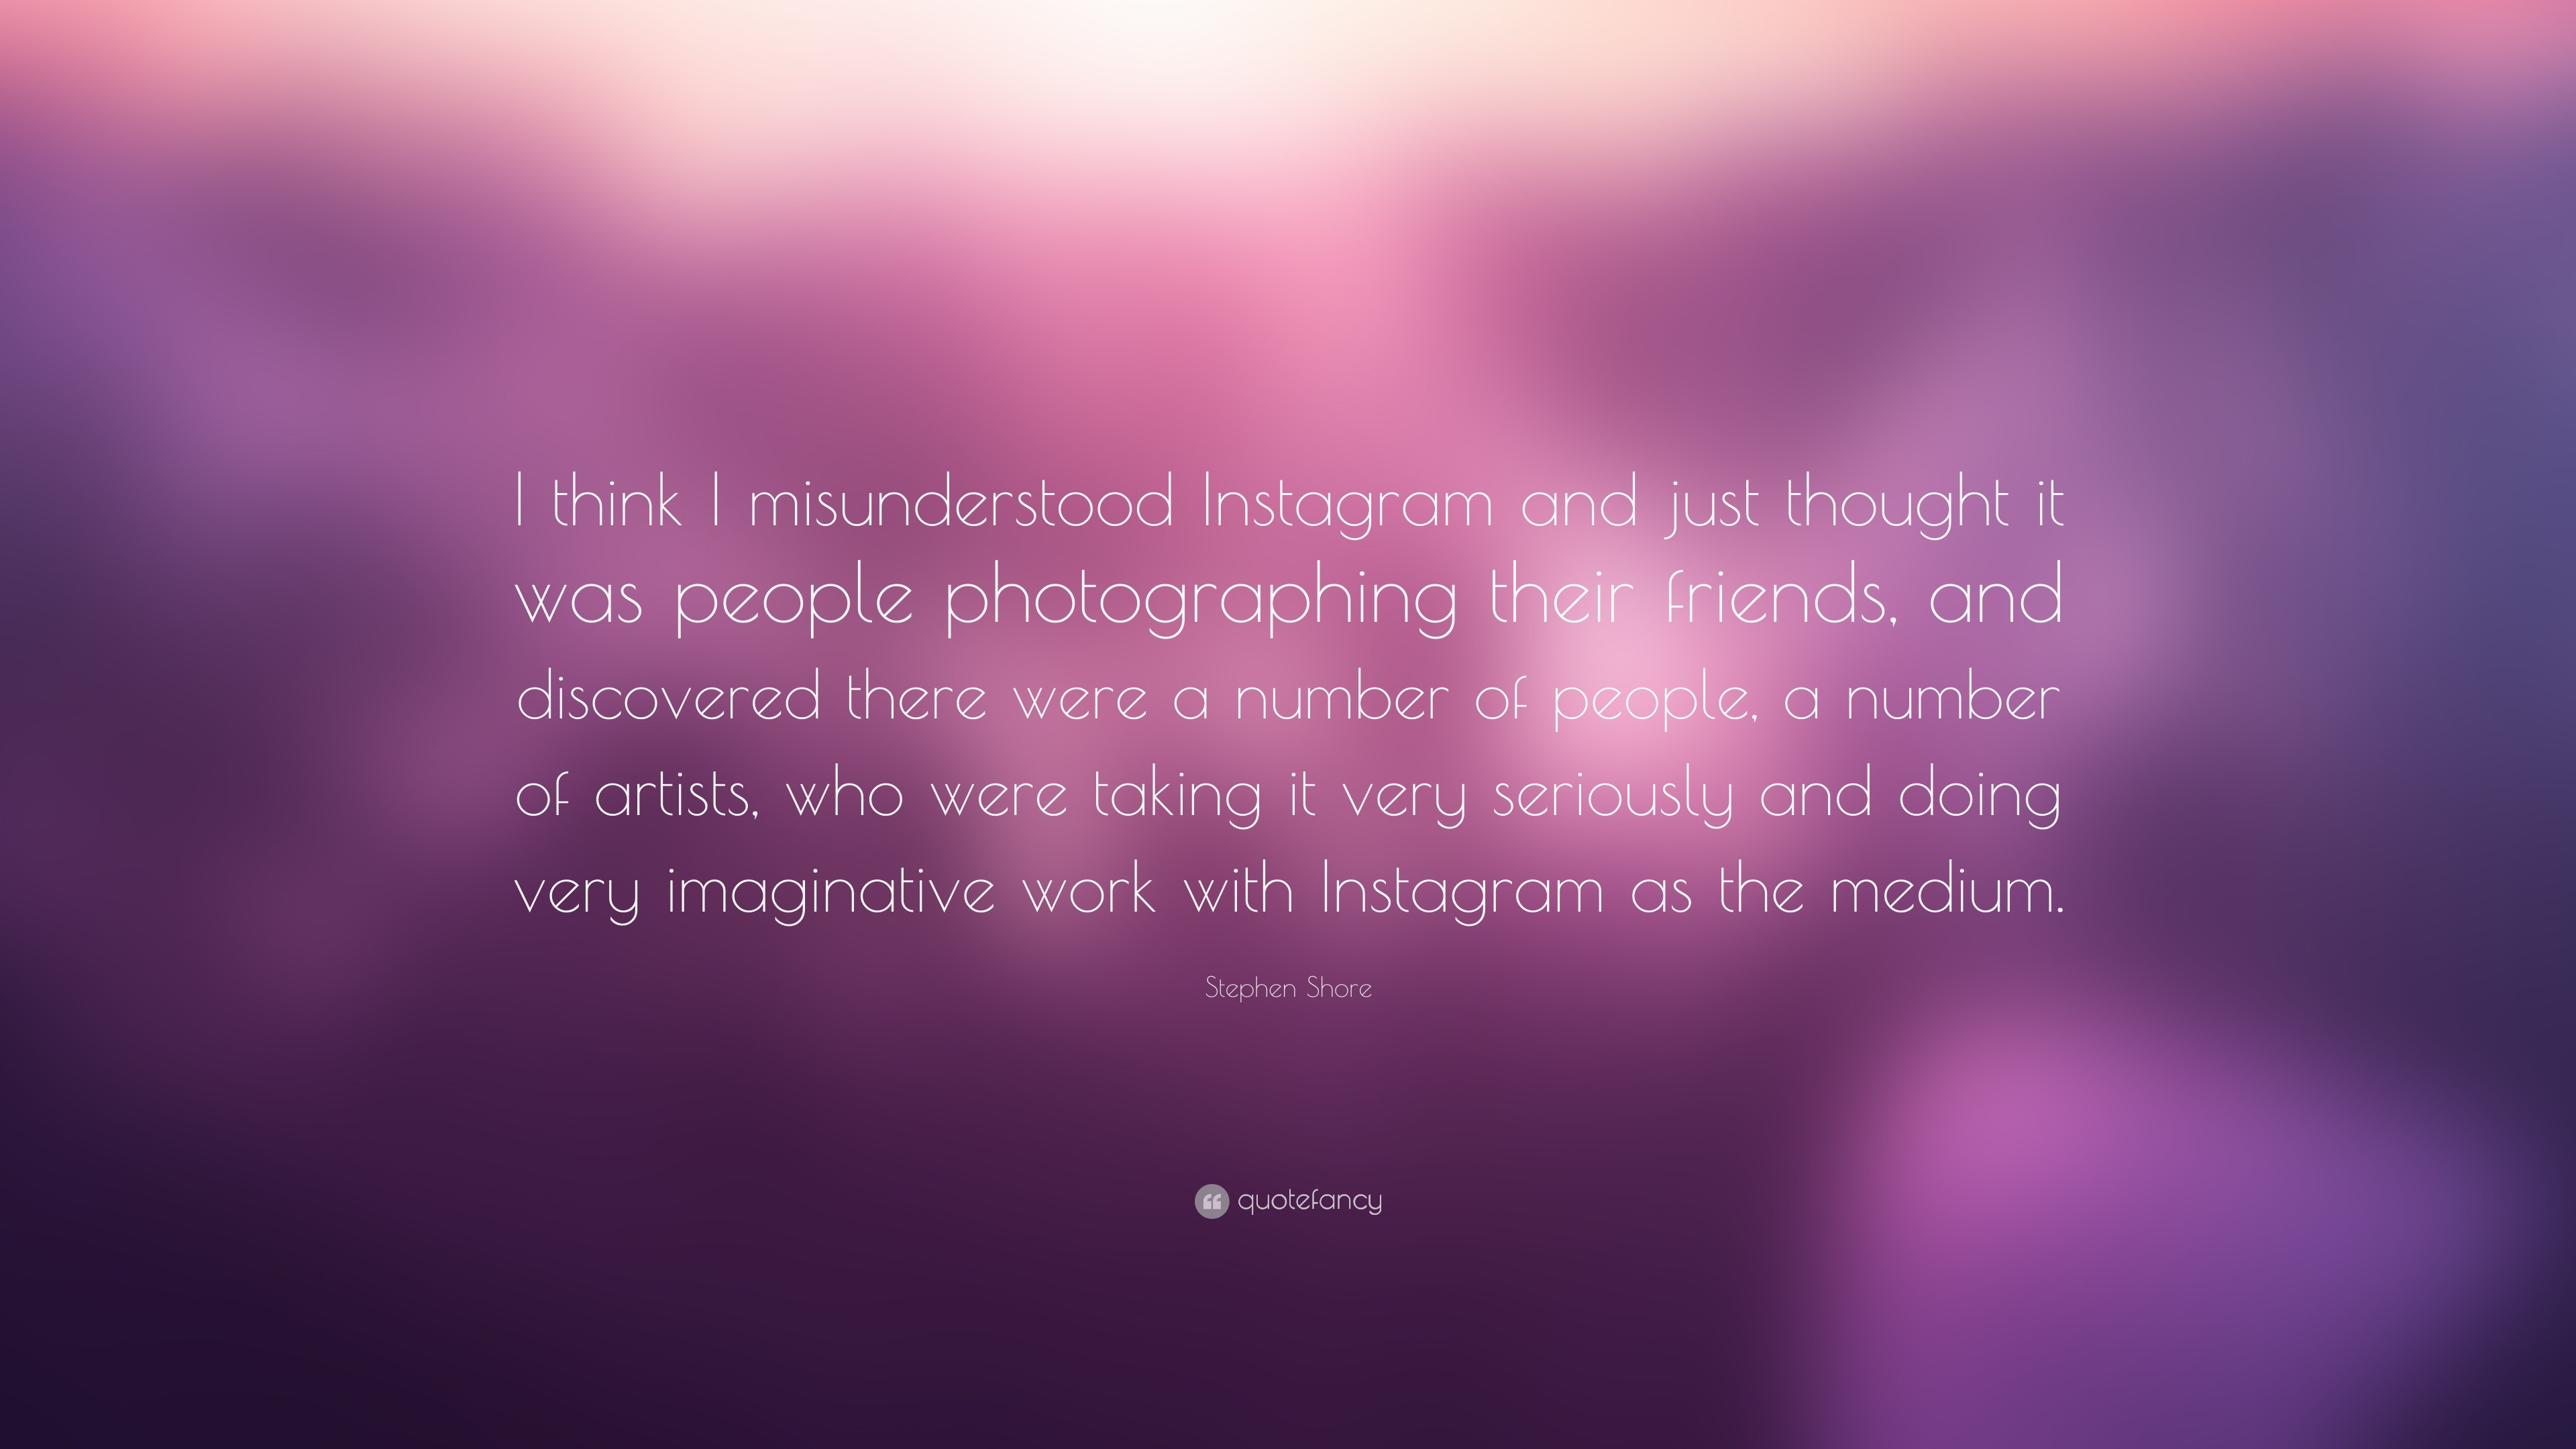 Stephen Shore Quote: “I think I misunderstood Instagram and just ...